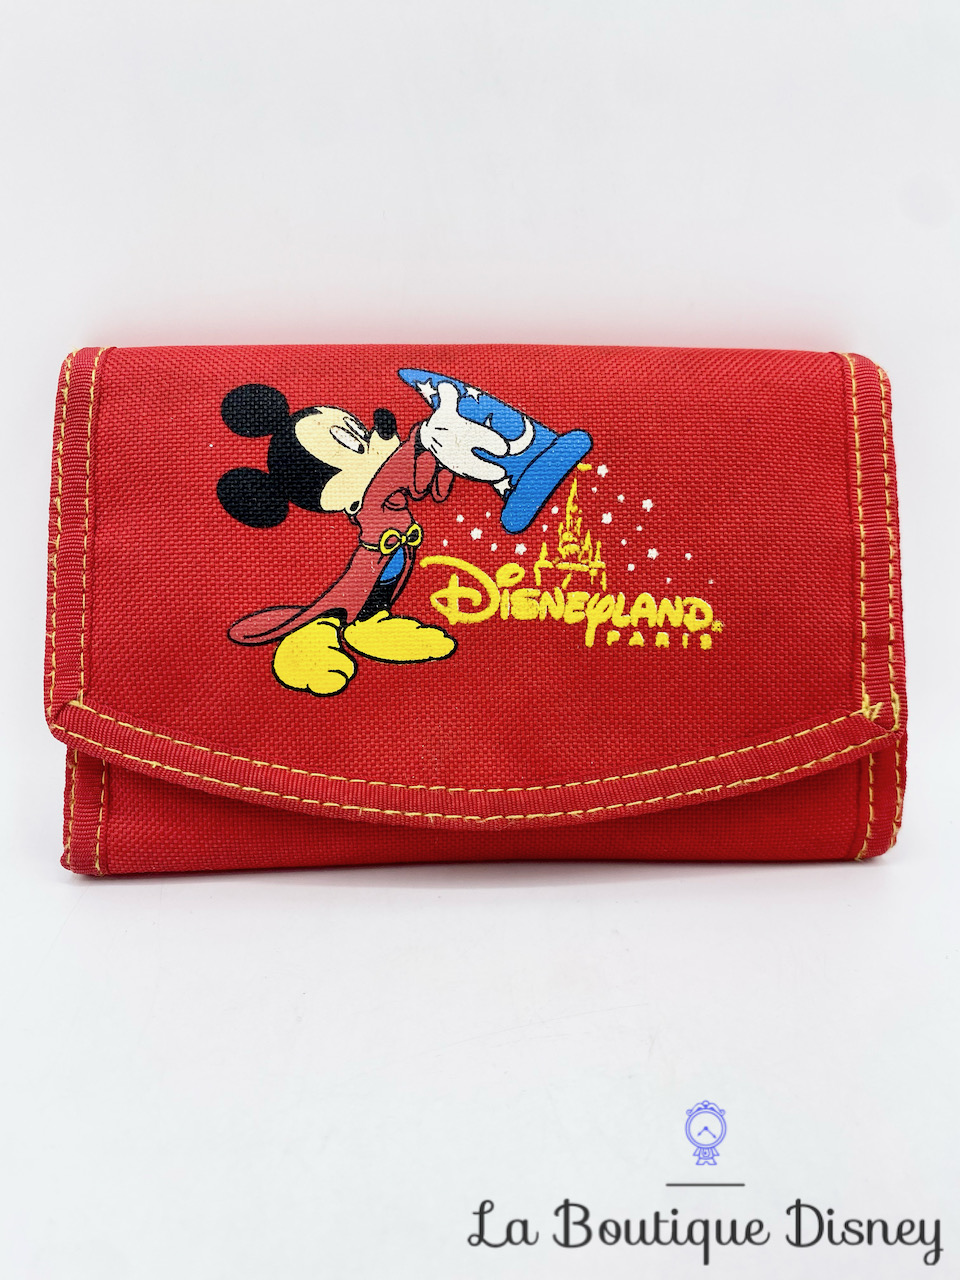 Porte monnaie Mickey Fantasia Disneyland Paris Disney portefeuille rouge vintage